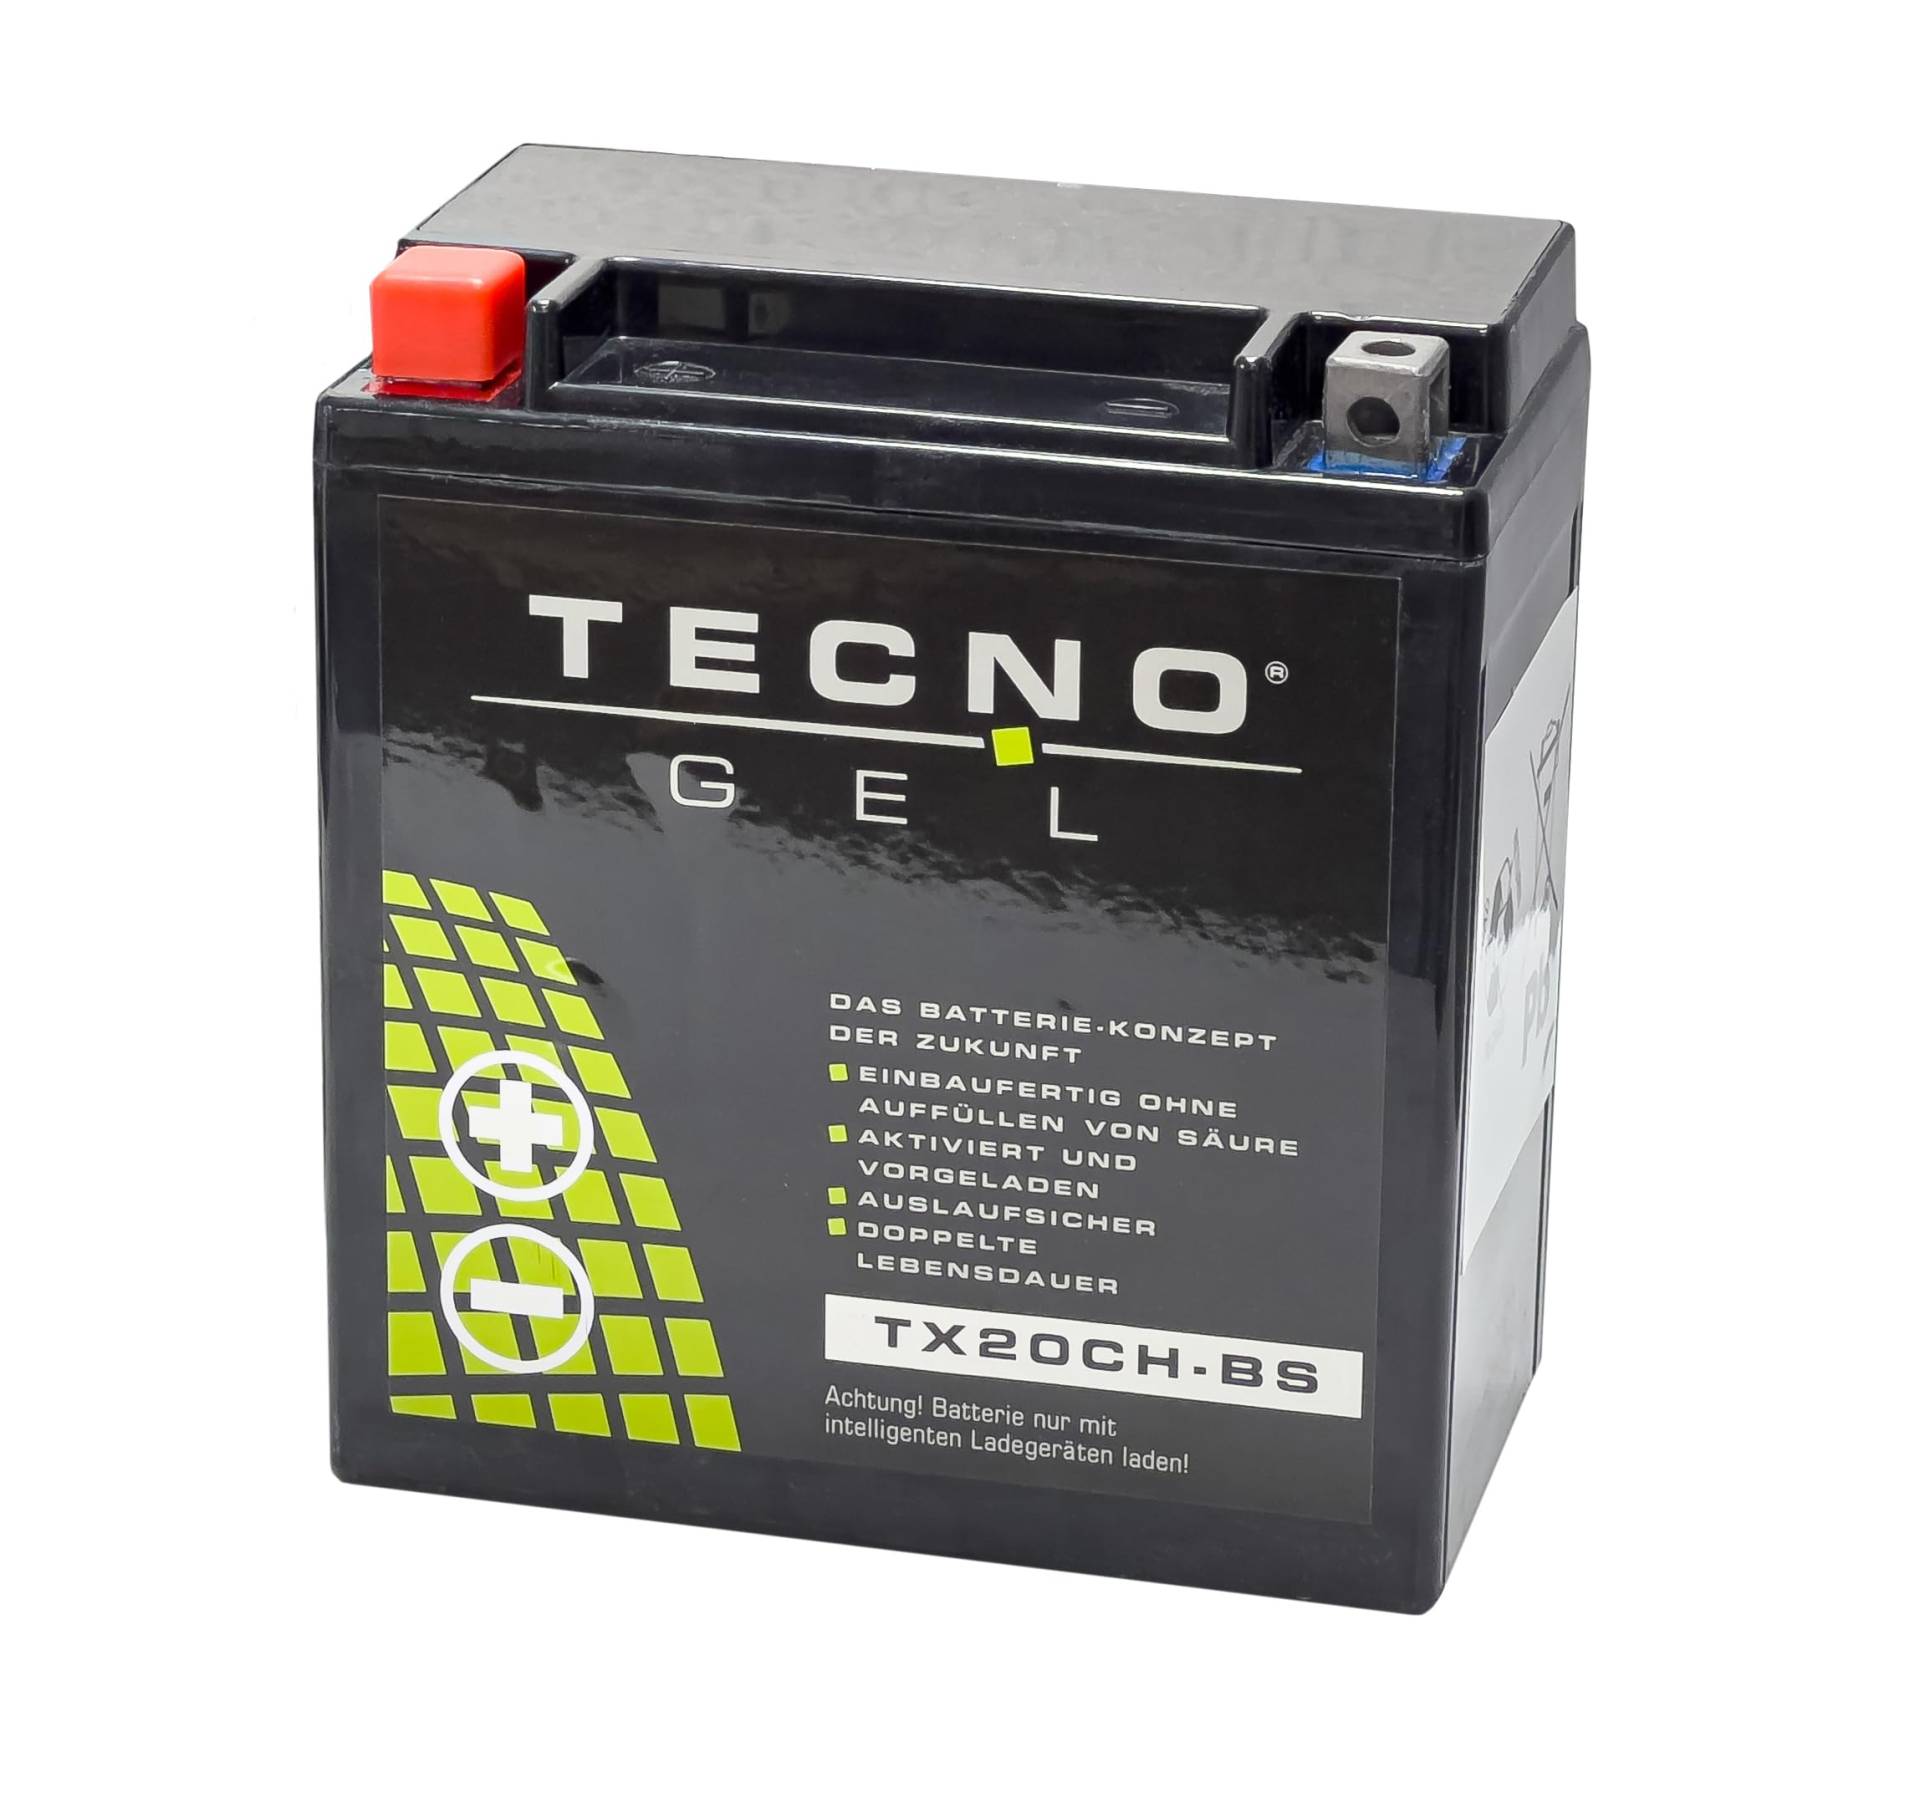 TECNO-GEL Motorrad-Batterie für YTX20CH-BS, 12V Gel-Batterie 18 Ah, 150x87x161 mm Polung + - von Wirth-Federn